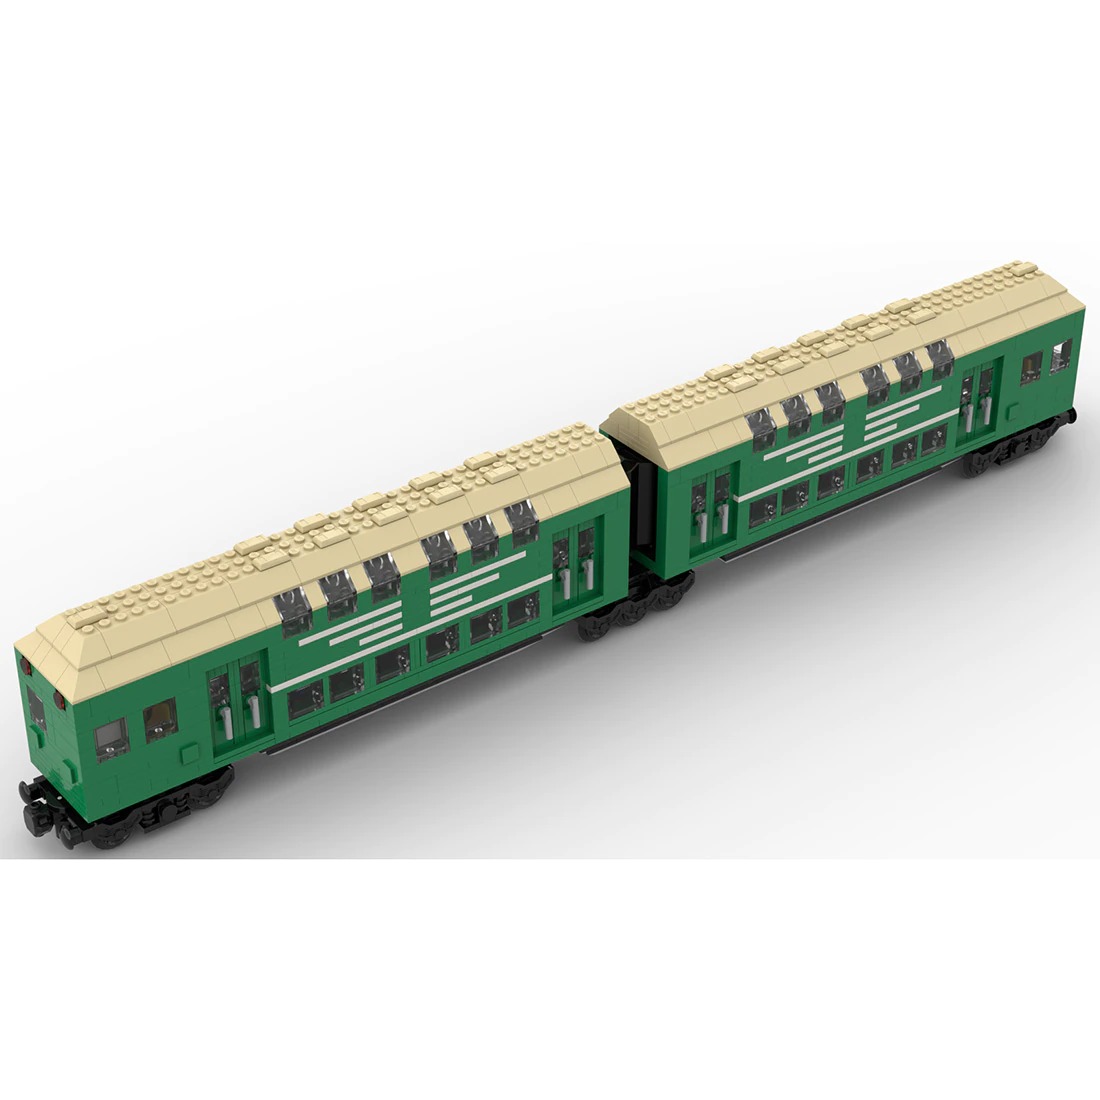 authorized moc 109281 7 axle train carri main 2 1 - CADA Block